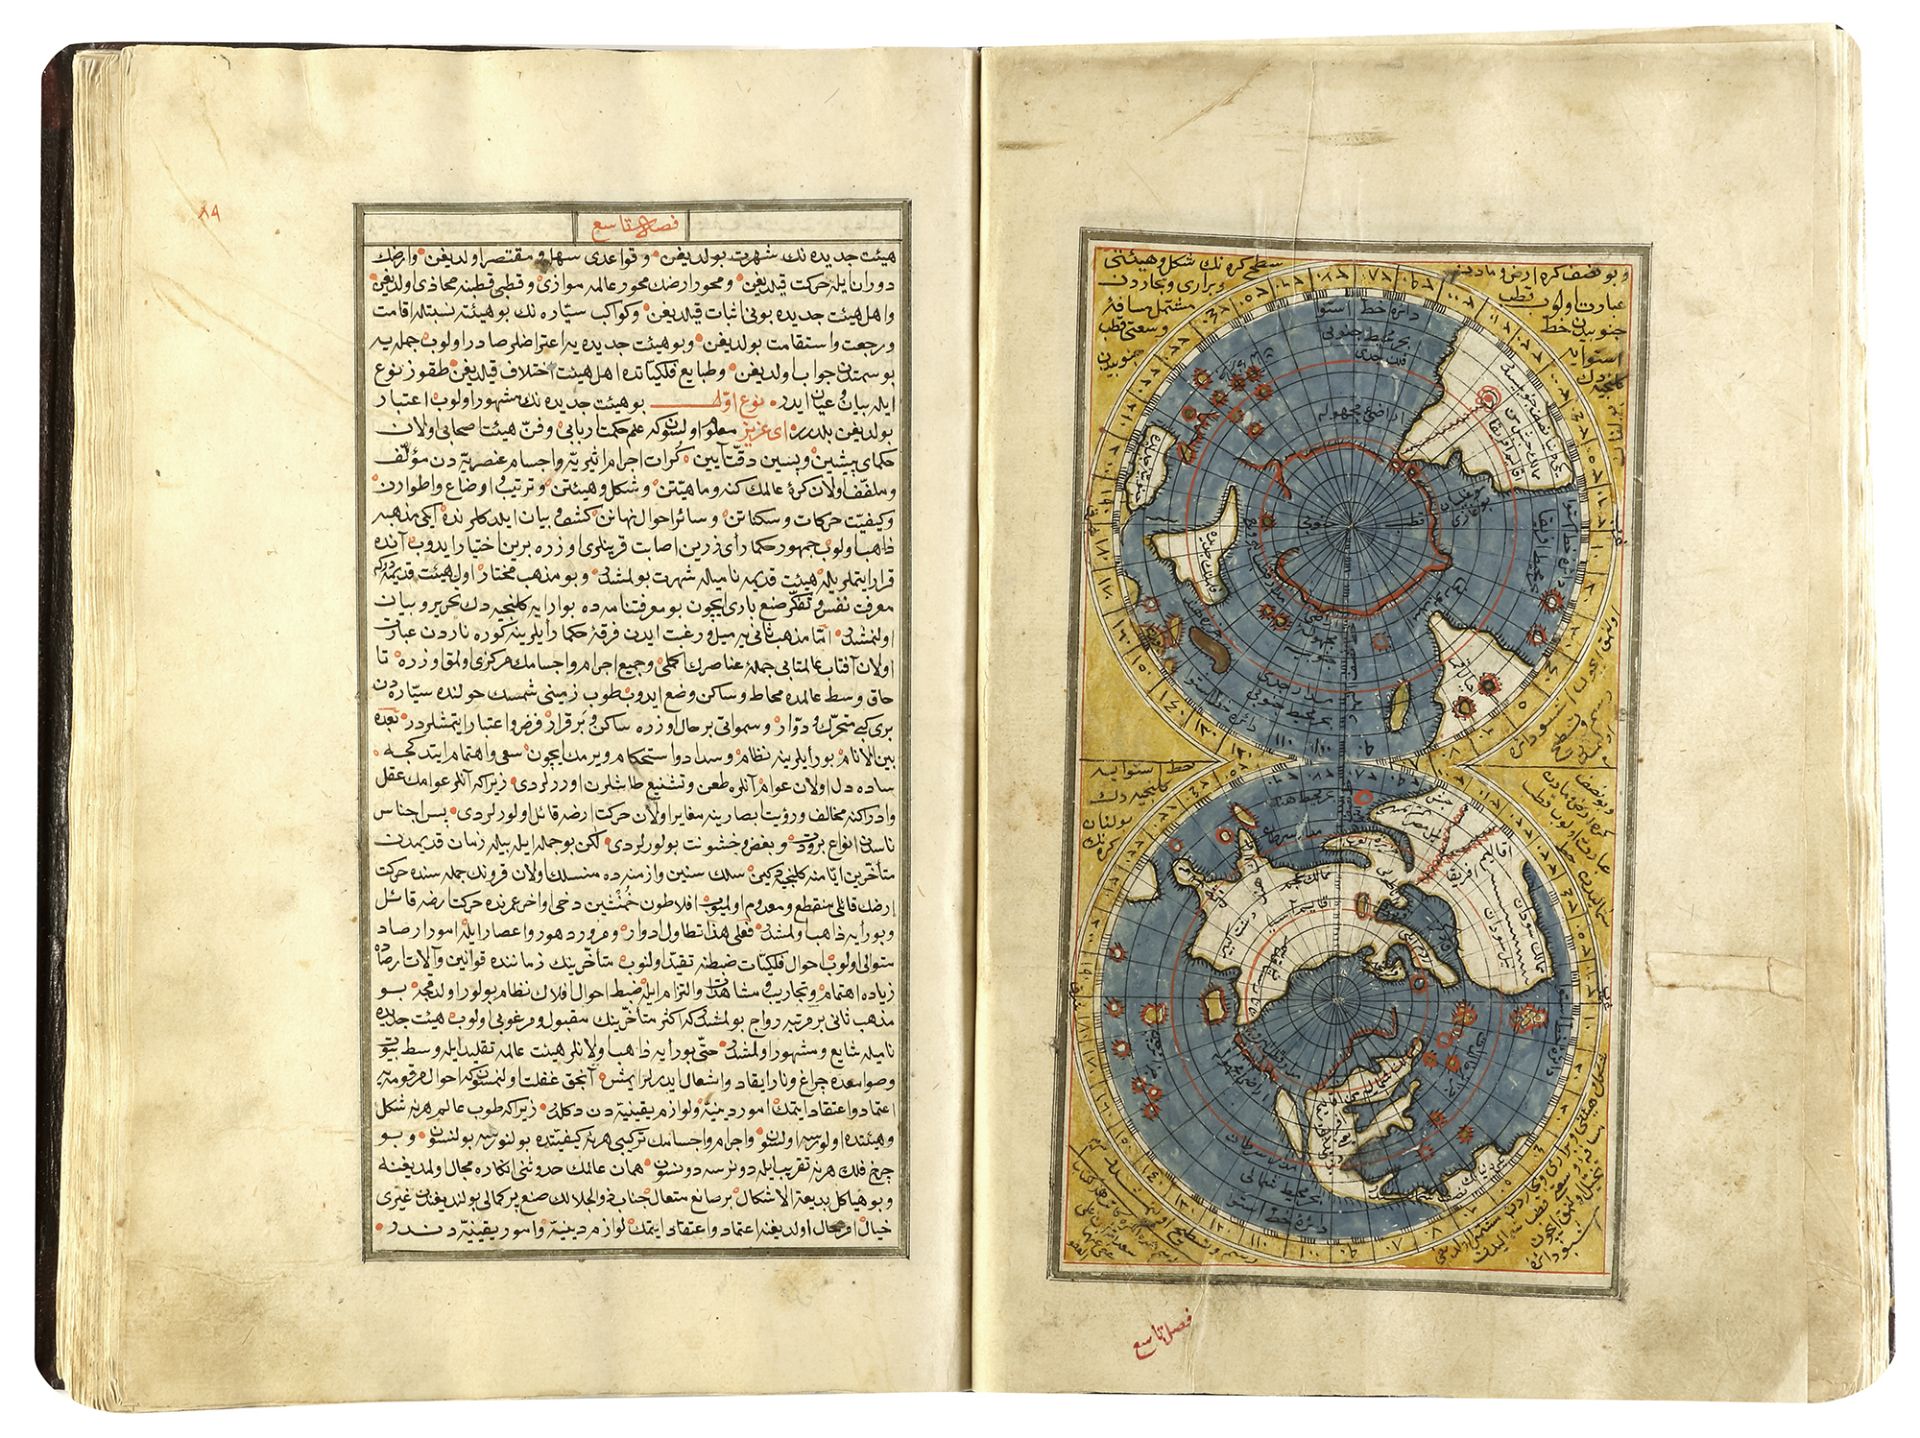 MARIFETNAME, IBRAHIM HAKKI, COPIED BY SAE'D ALLAH BIN ALI BIN AHMED, TURKEY, 1221 AH/1806 AD - Image 37 of 58